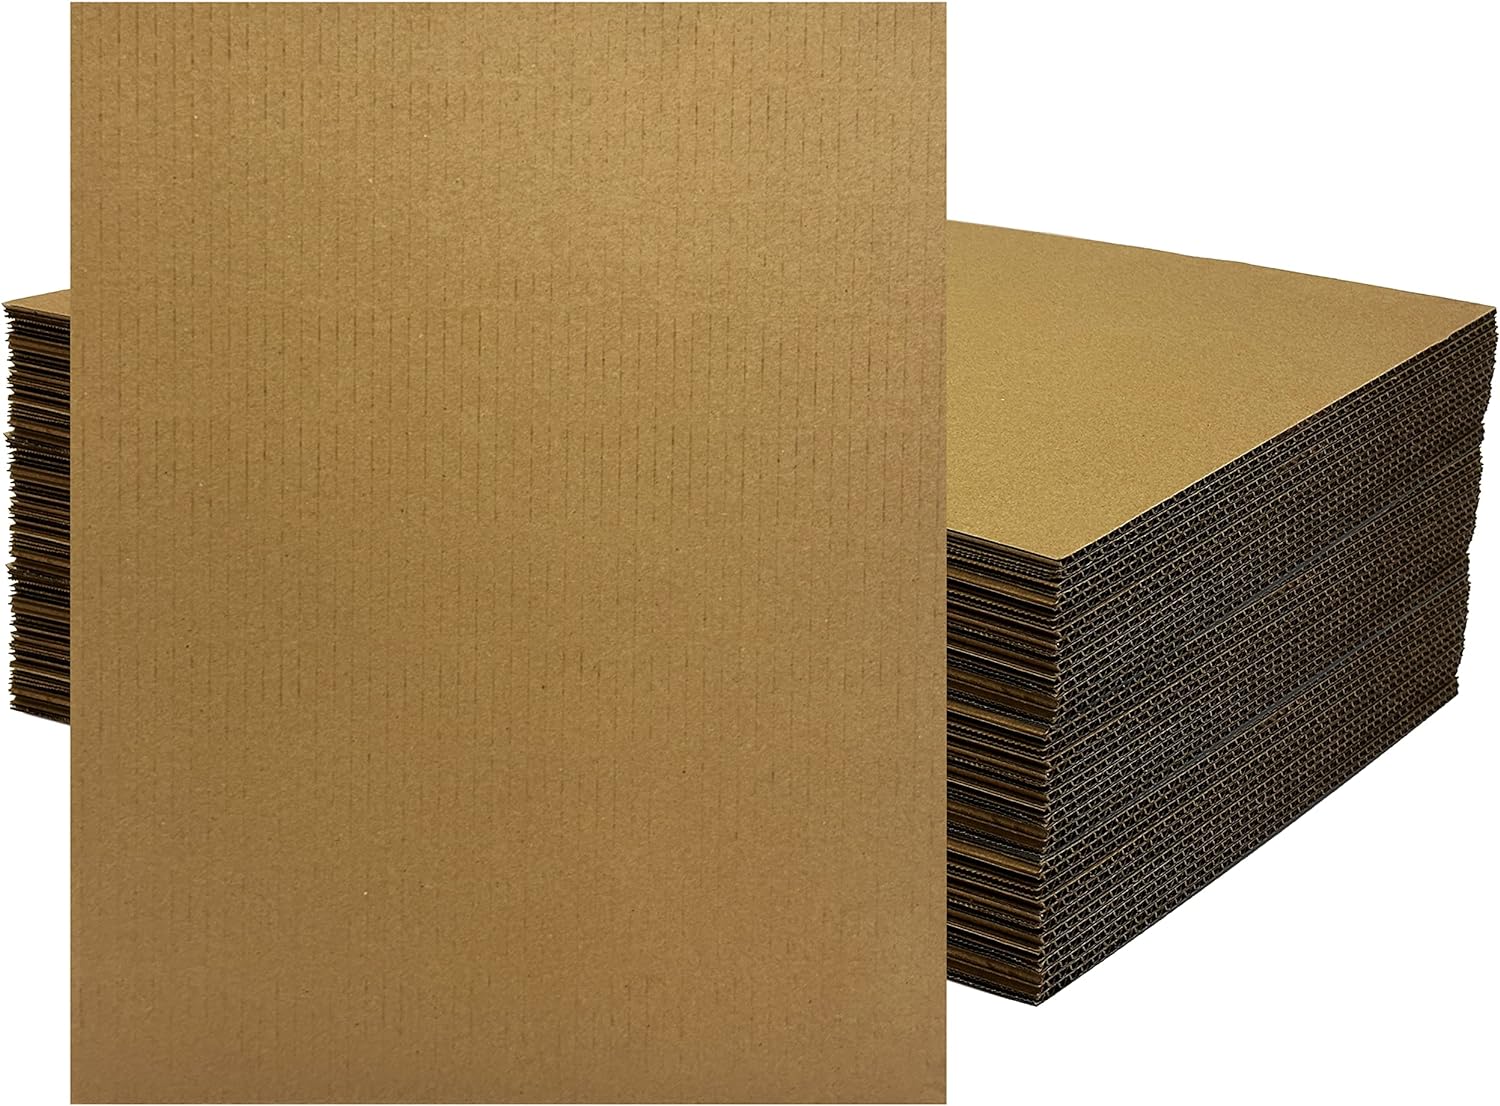  Aviditi Corrugated Cardboard Sheets 24 X 36